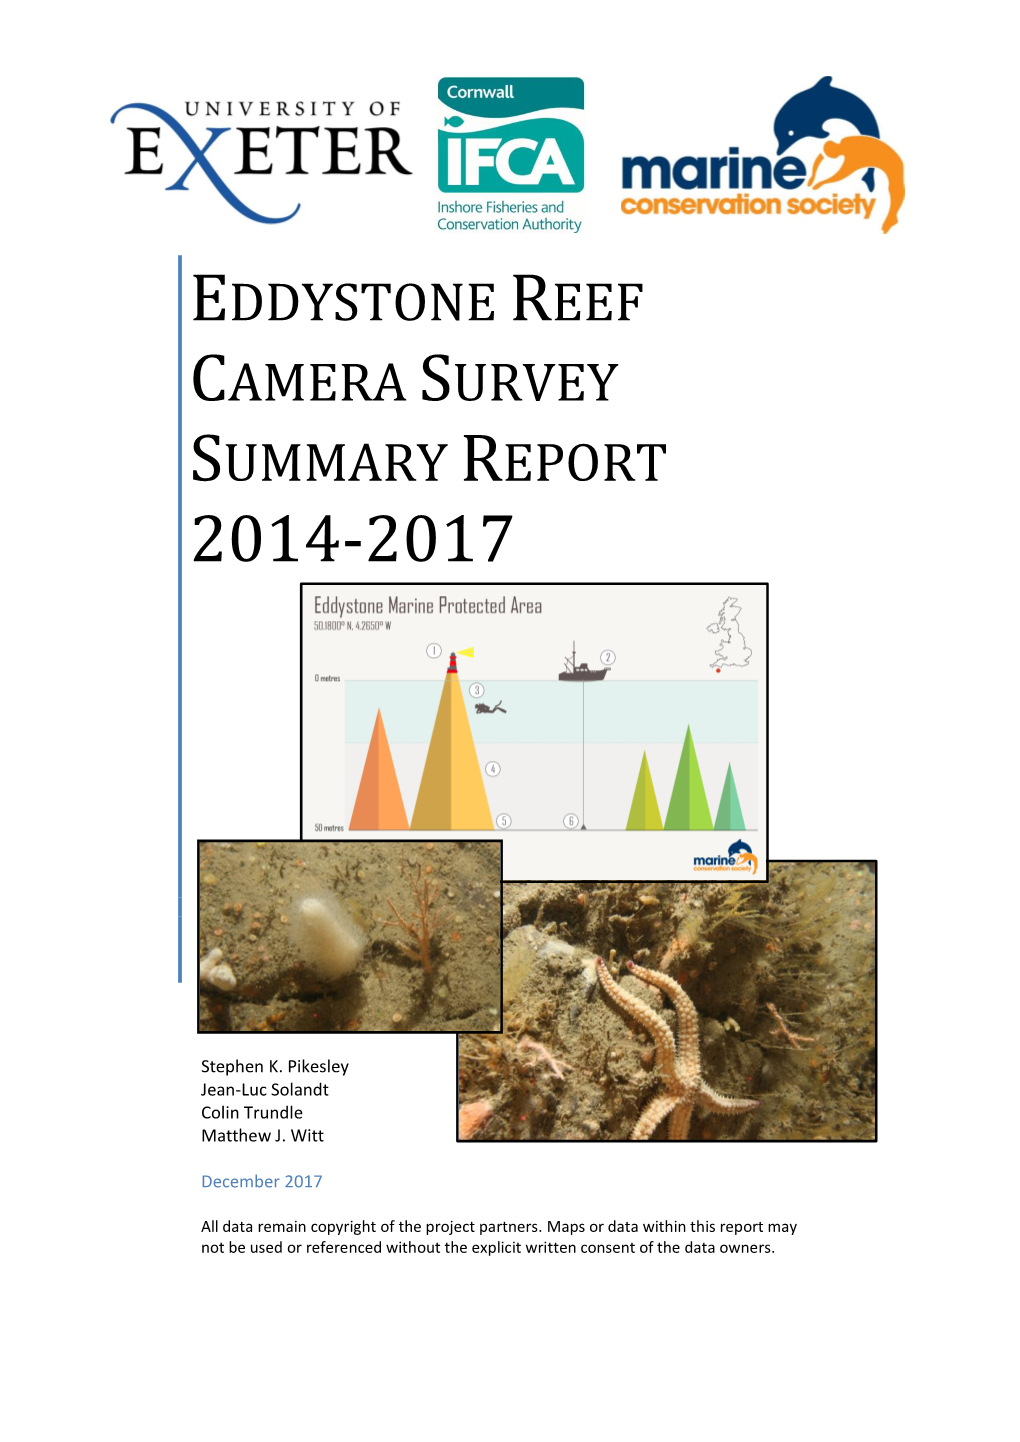 Eddystone Reef Camera Survey Summary Report 2014-2017